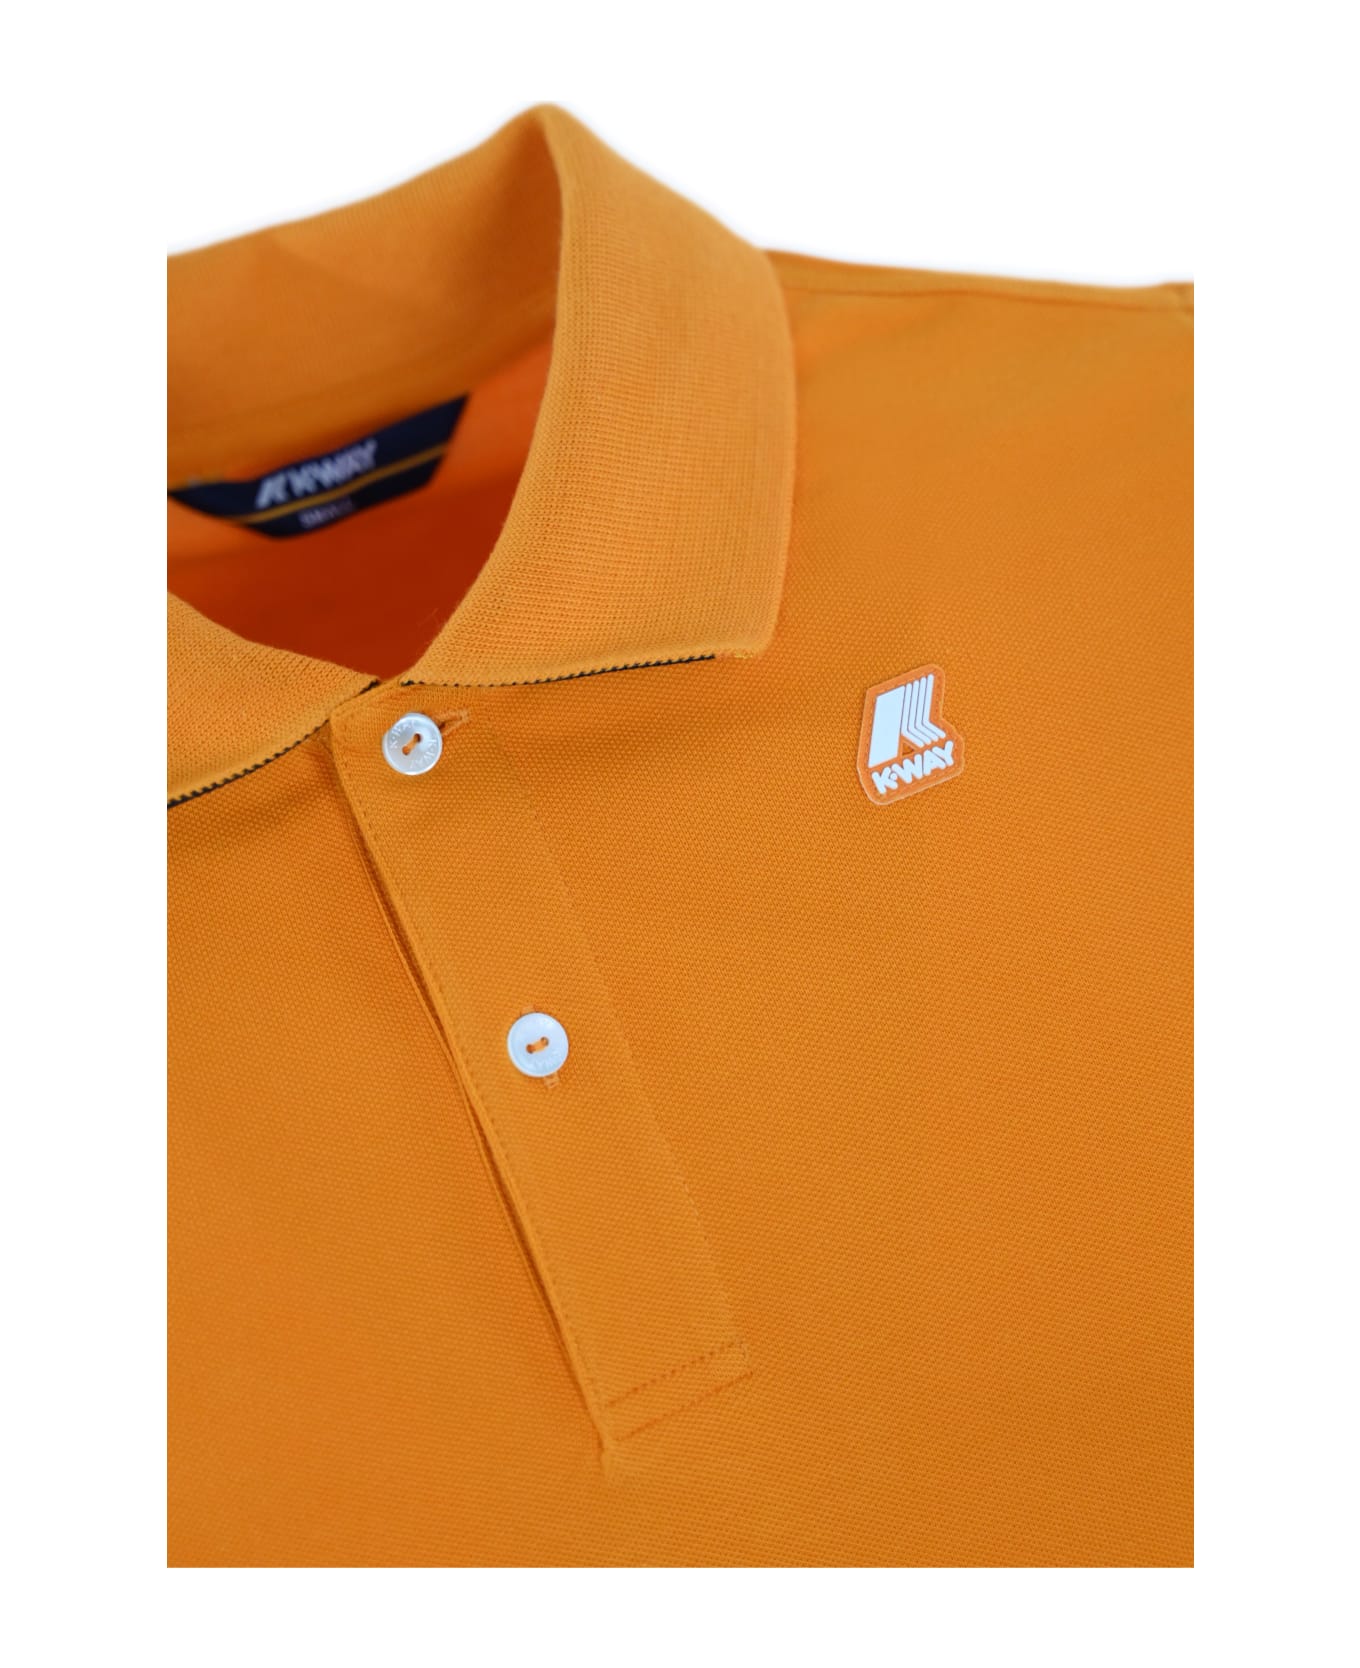 K-Way Vincent Polo Shirt - Orange md